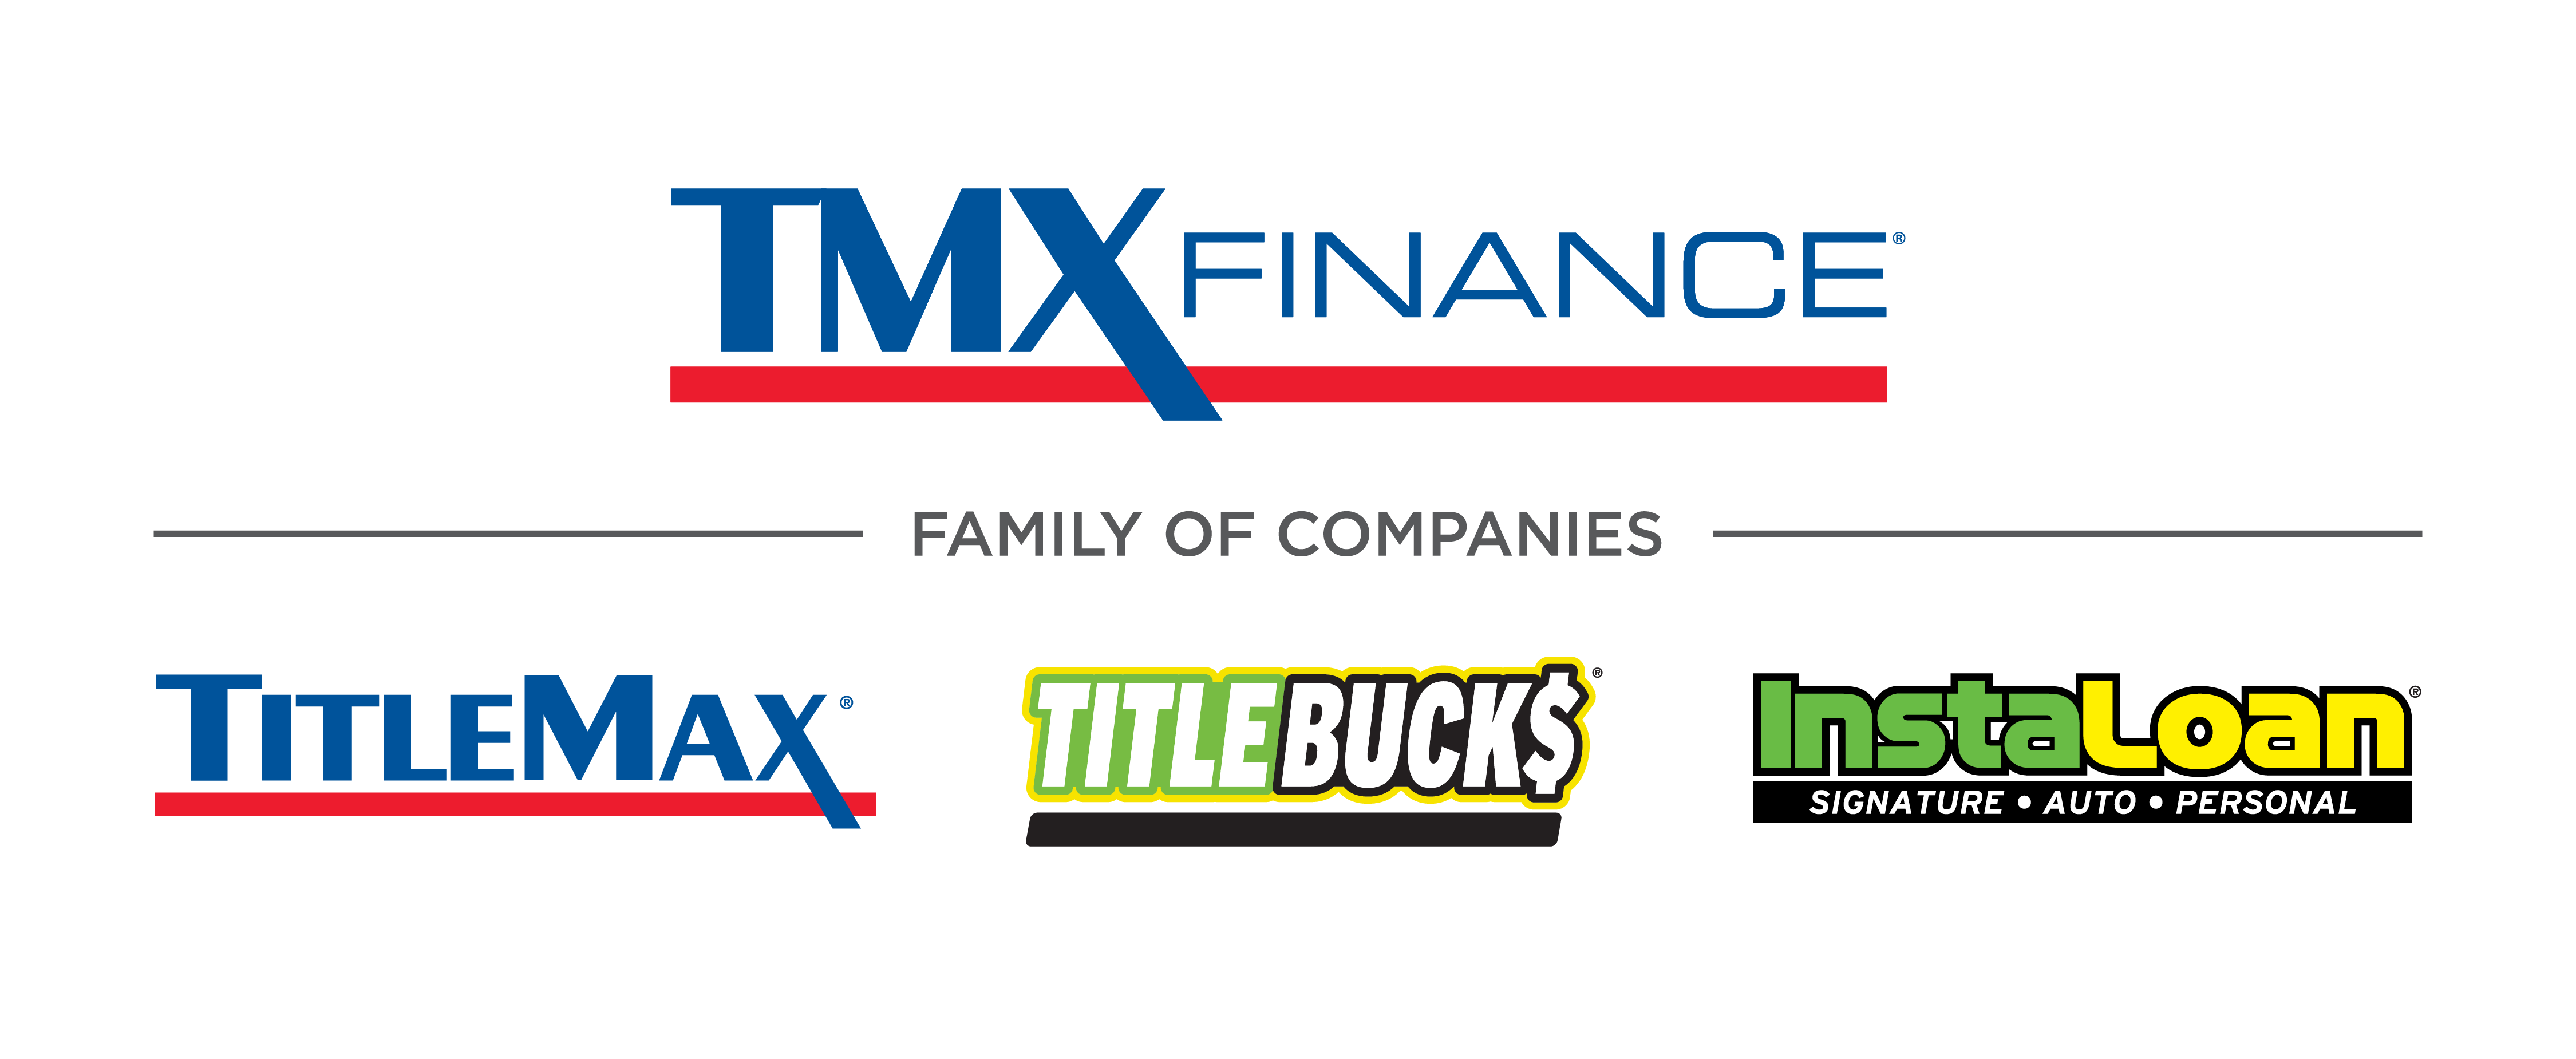 TMX Finance Family of Companies logo